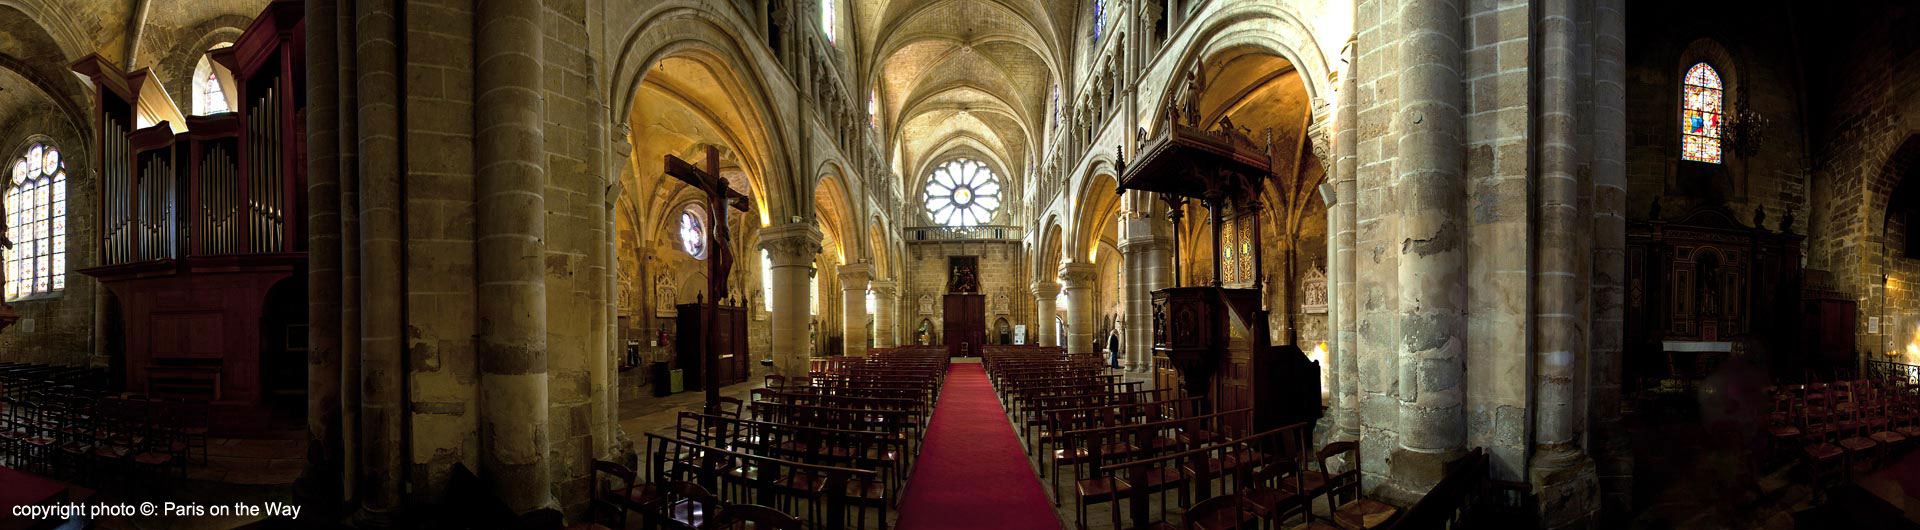 The church of Auvers sur Oise